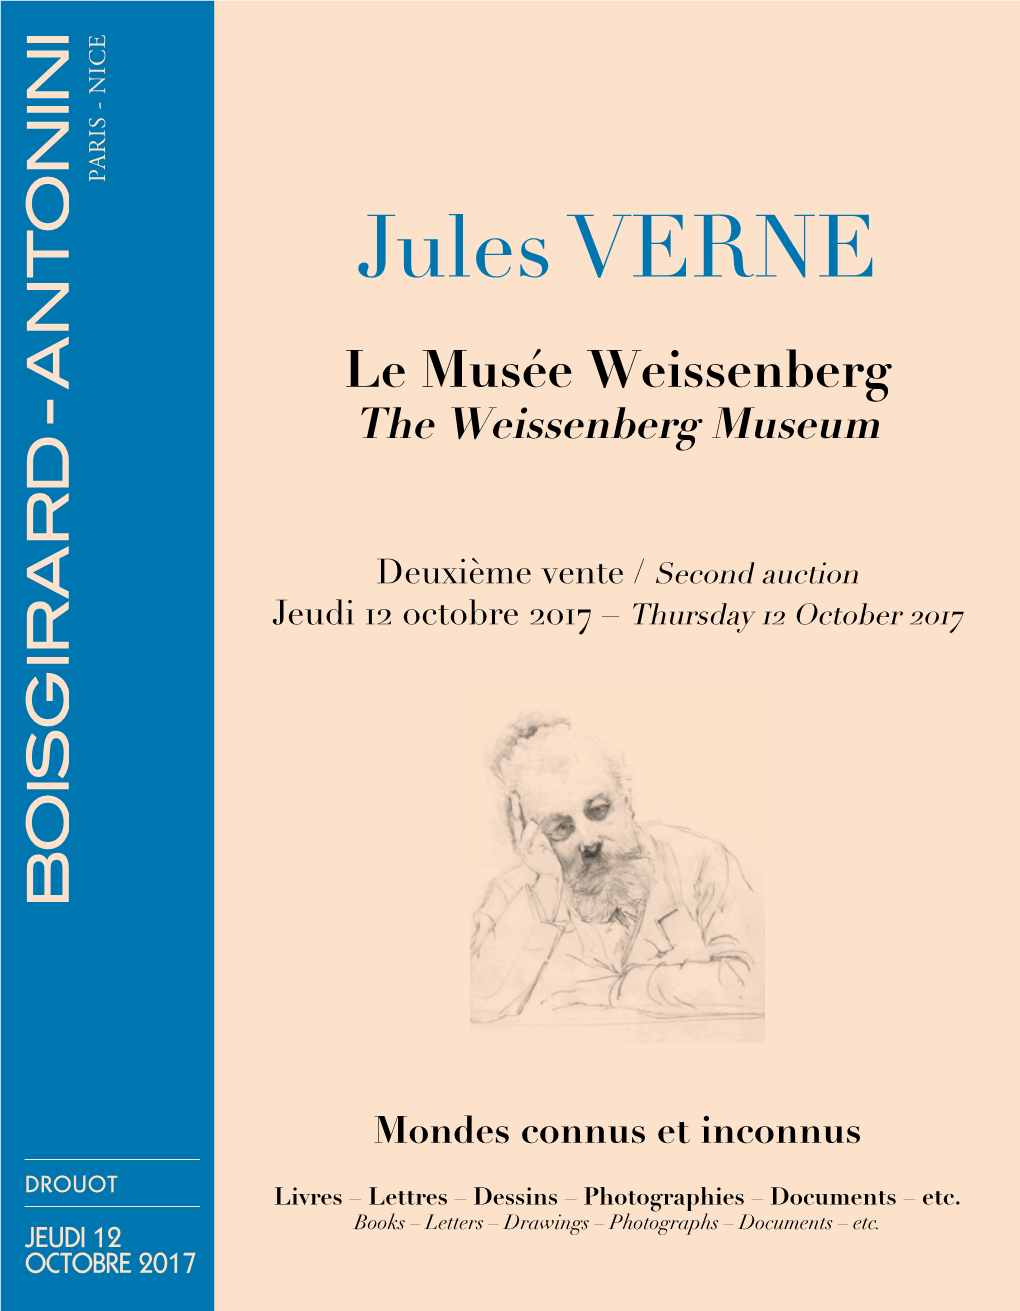 Jules VERNE Le Musée Weissenberg the Weissenberg Museum